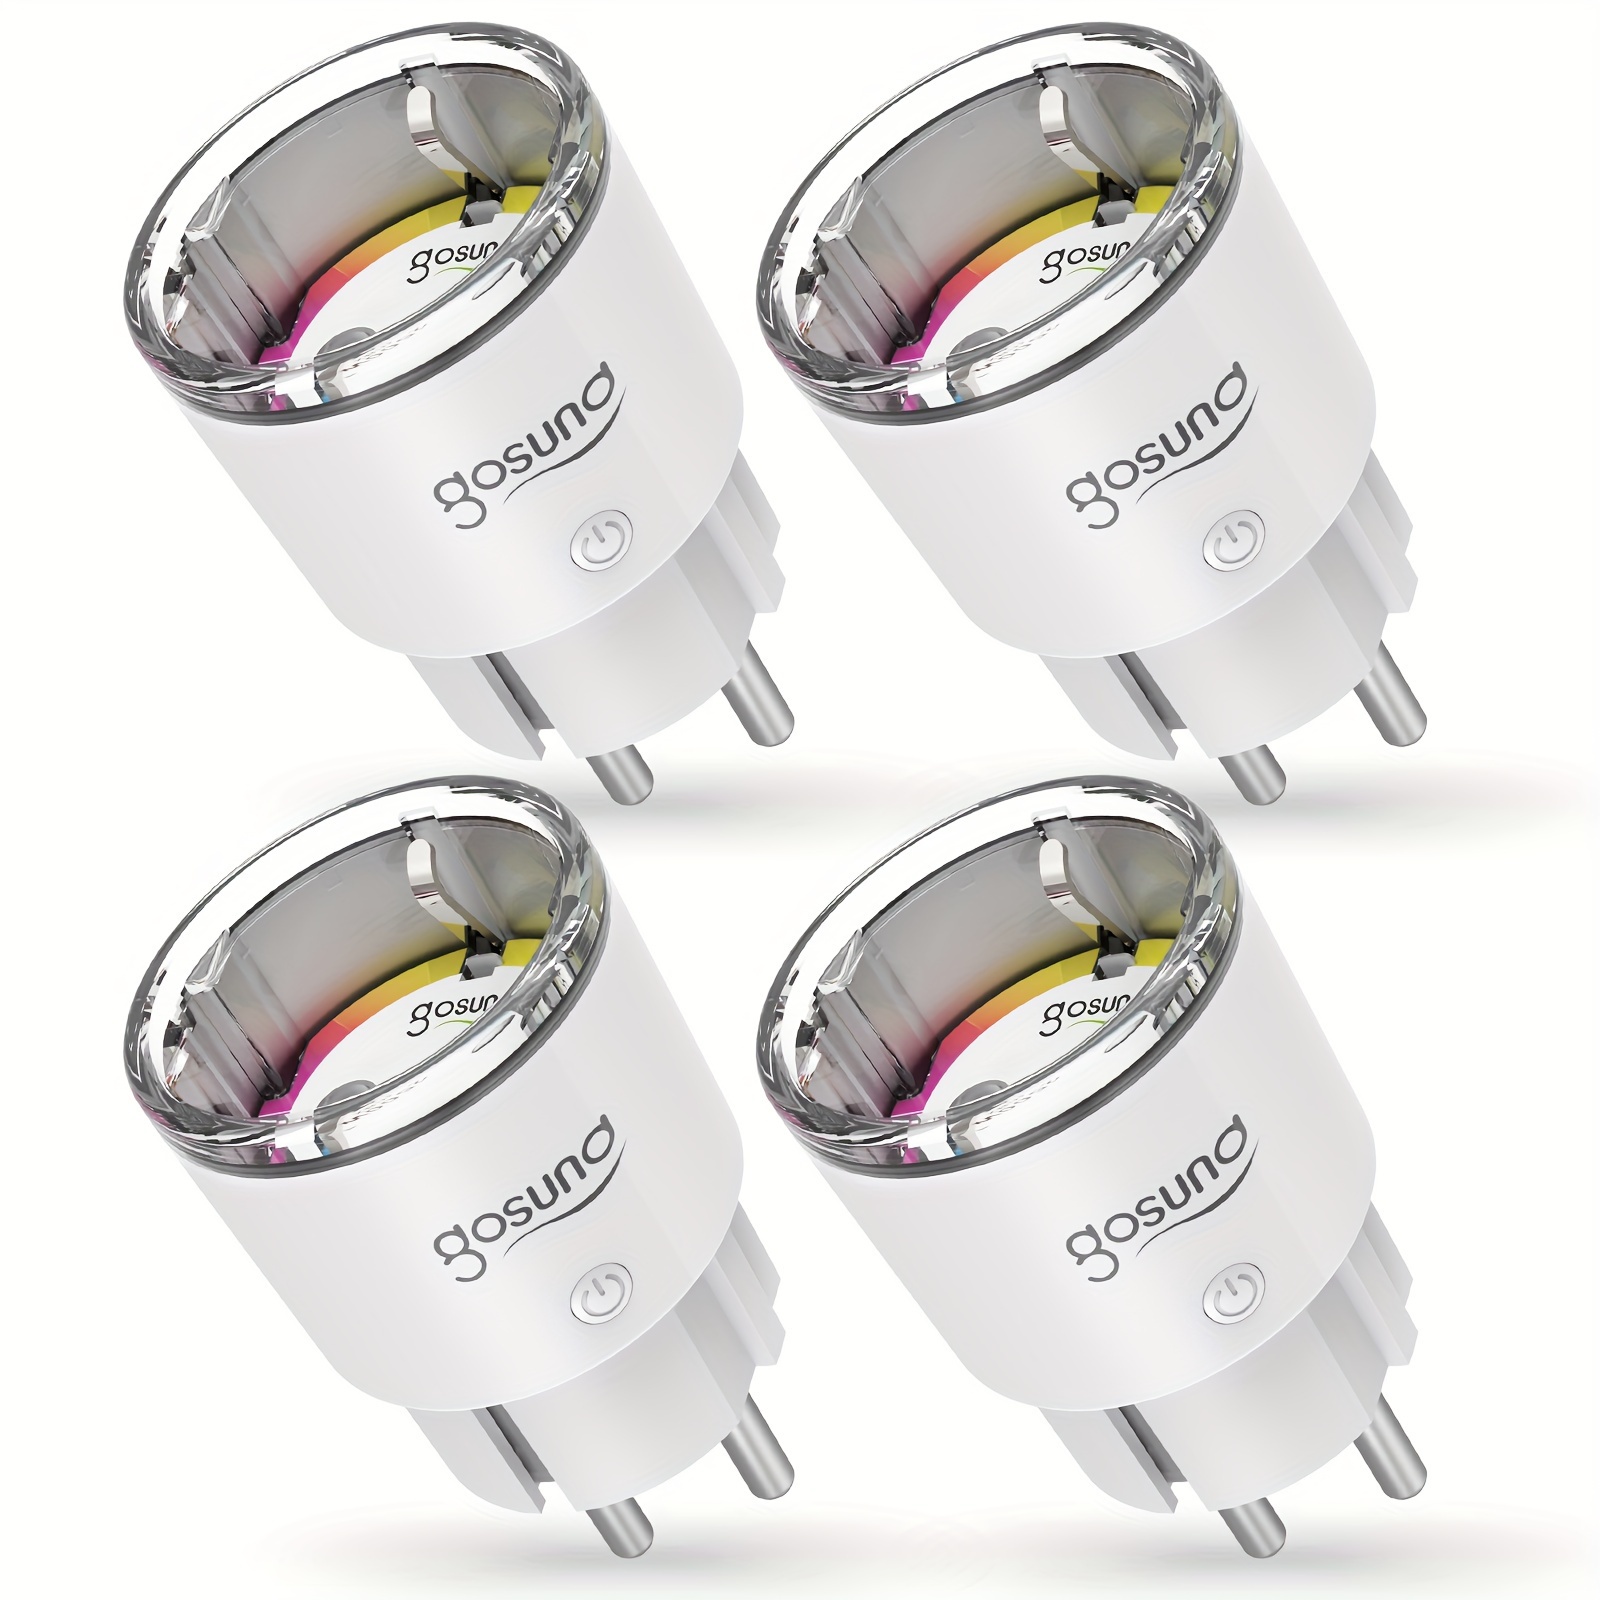 5GHz Smart Plug Review: BroadLink Smart Plug Mini